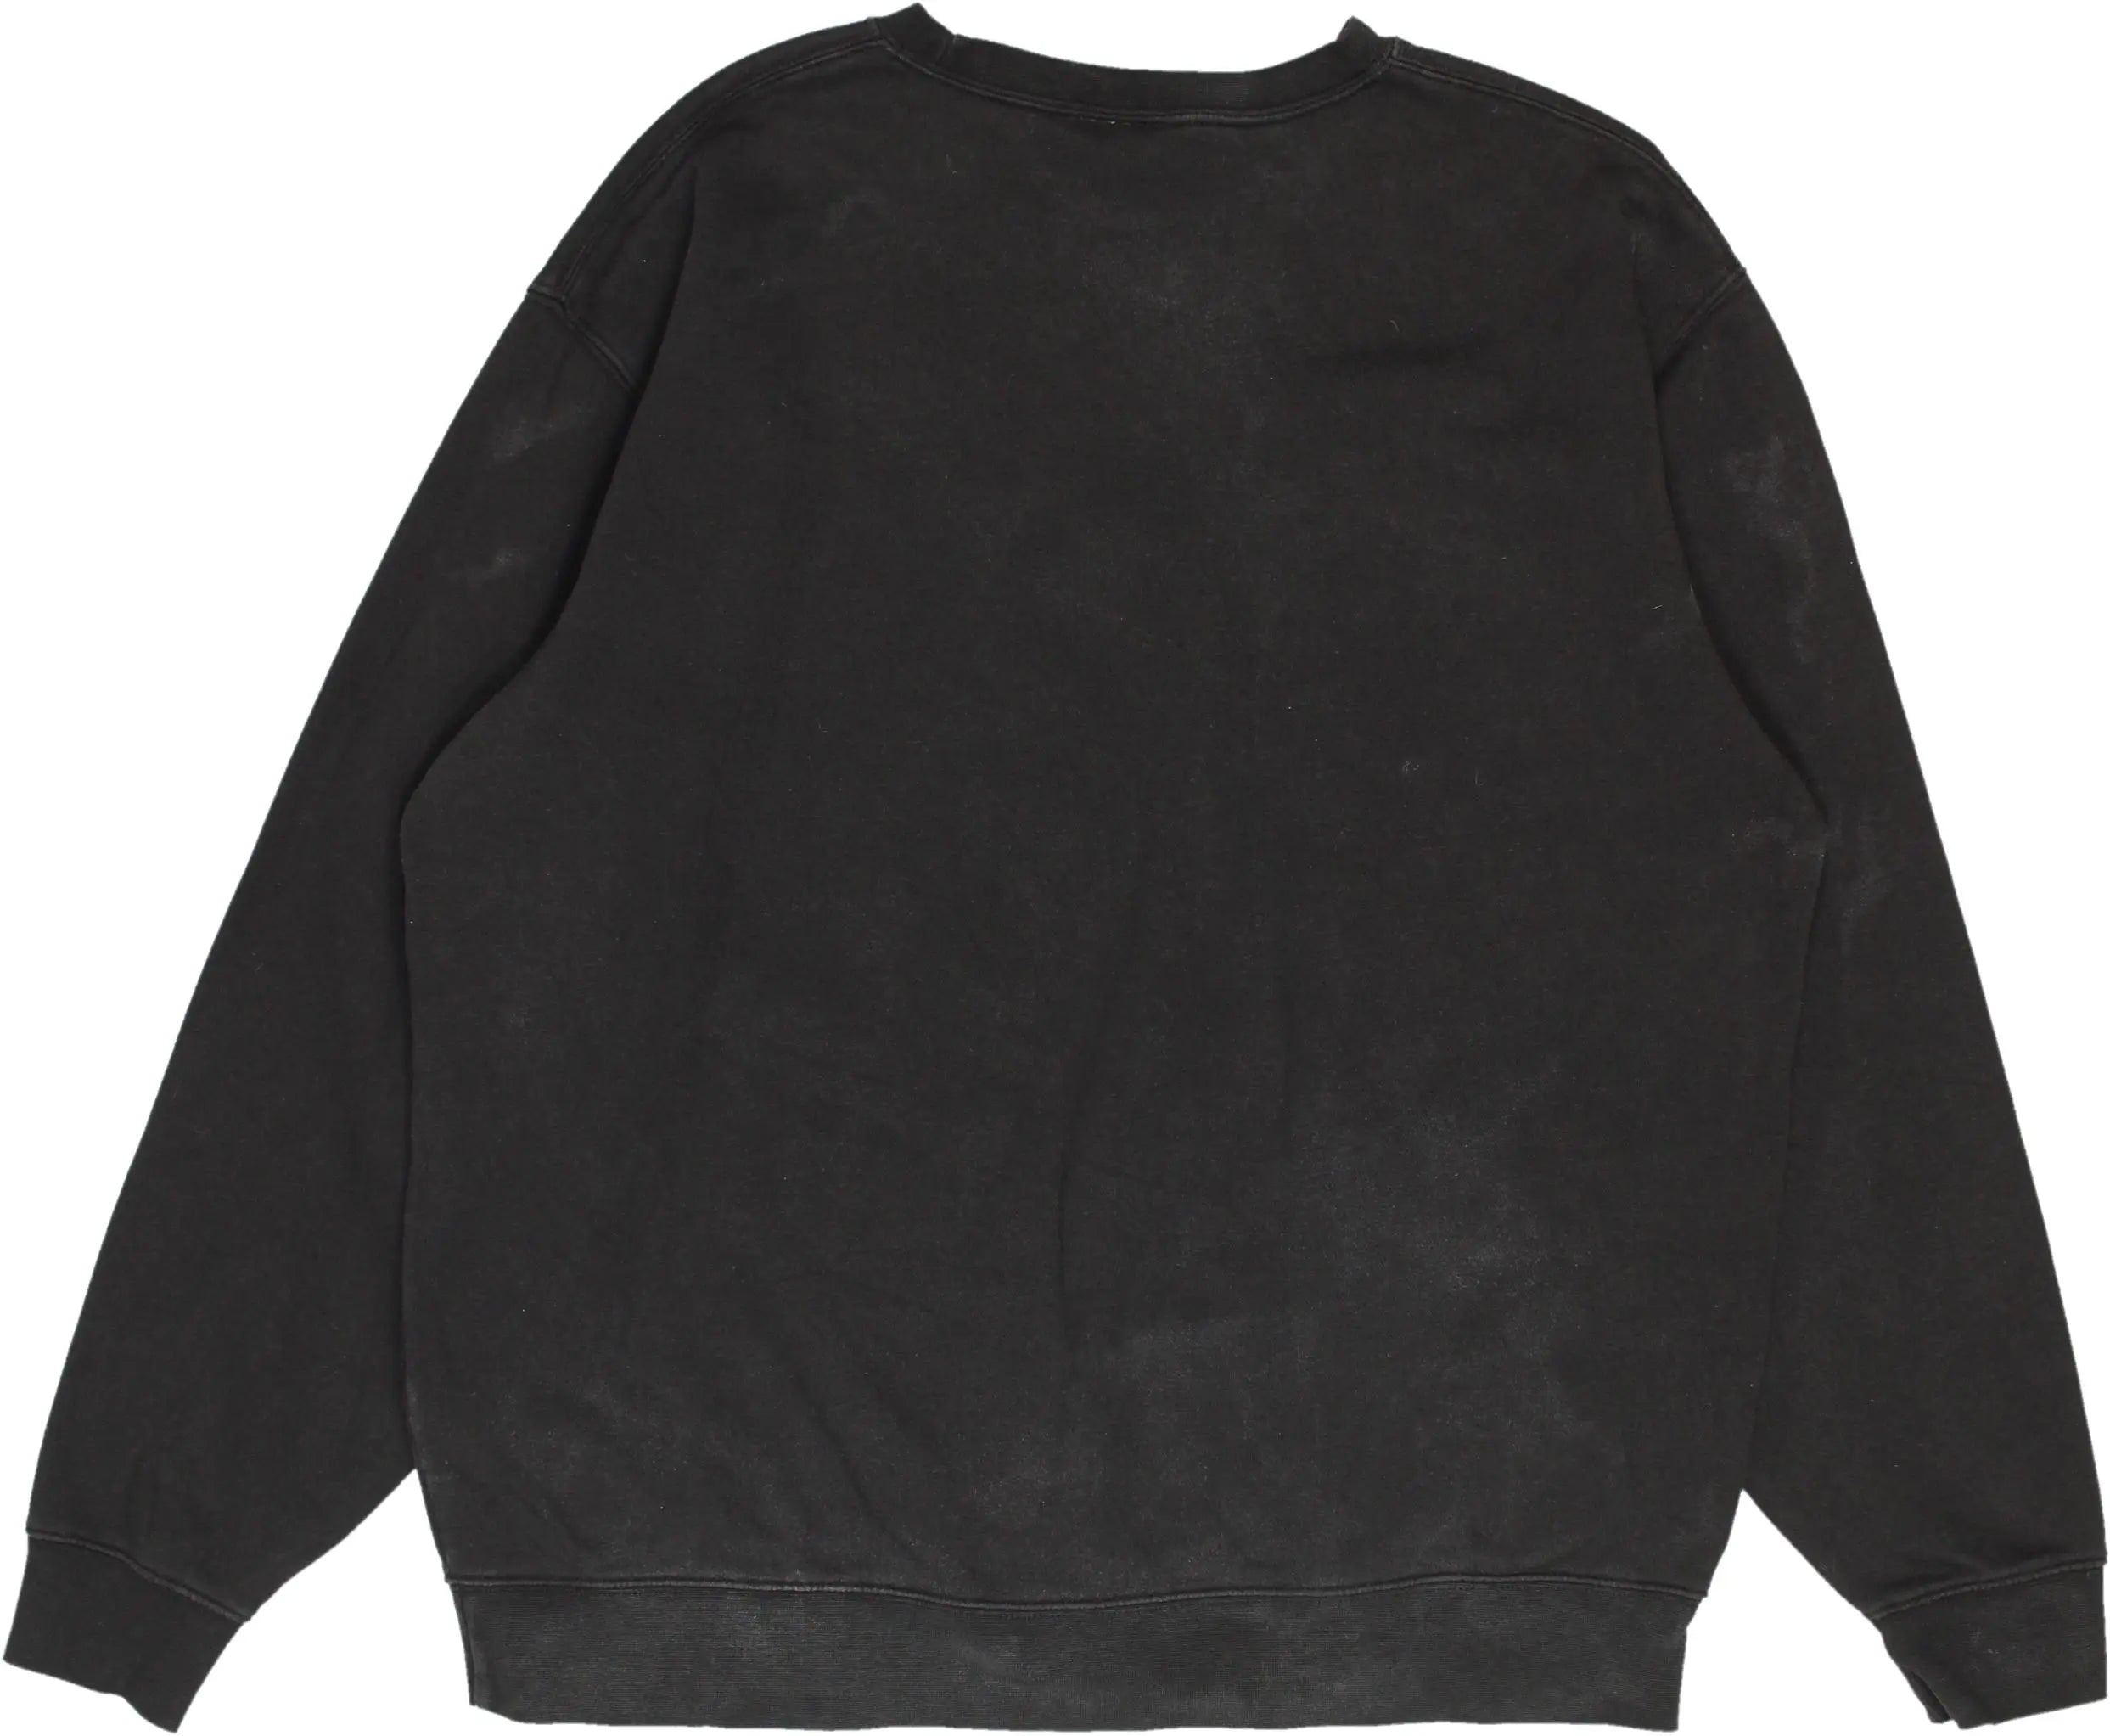 Joker Brand - Black Joker Sweater- ThriftTale.com - Vintage and second handclothing